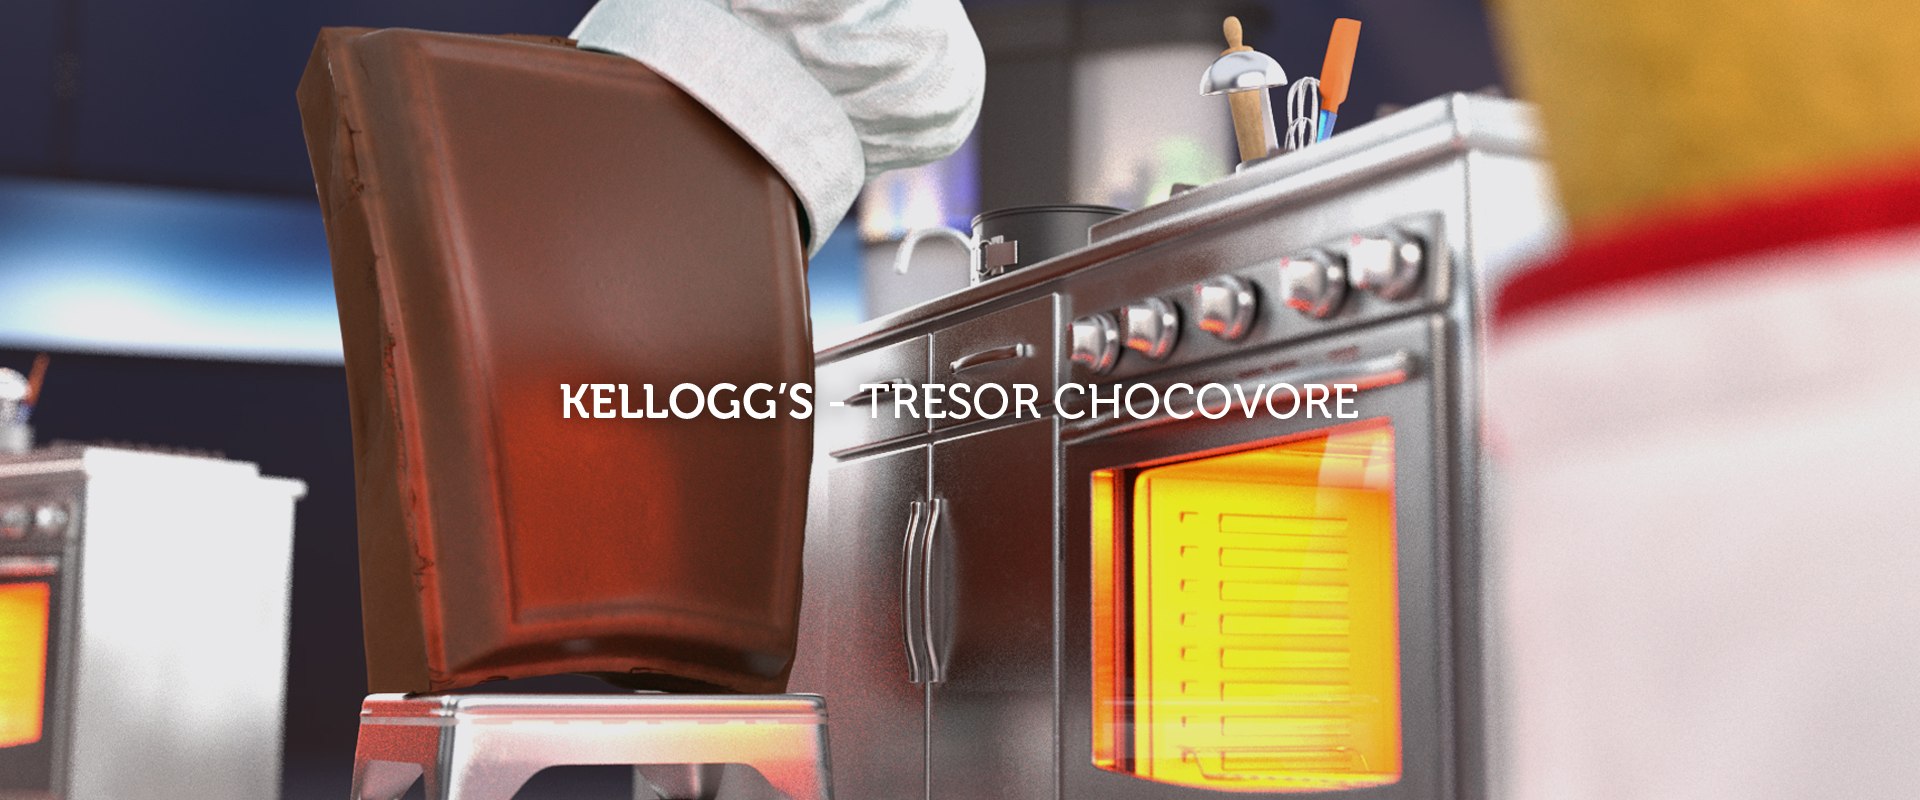 Kellogg’s Tresor Chocovore